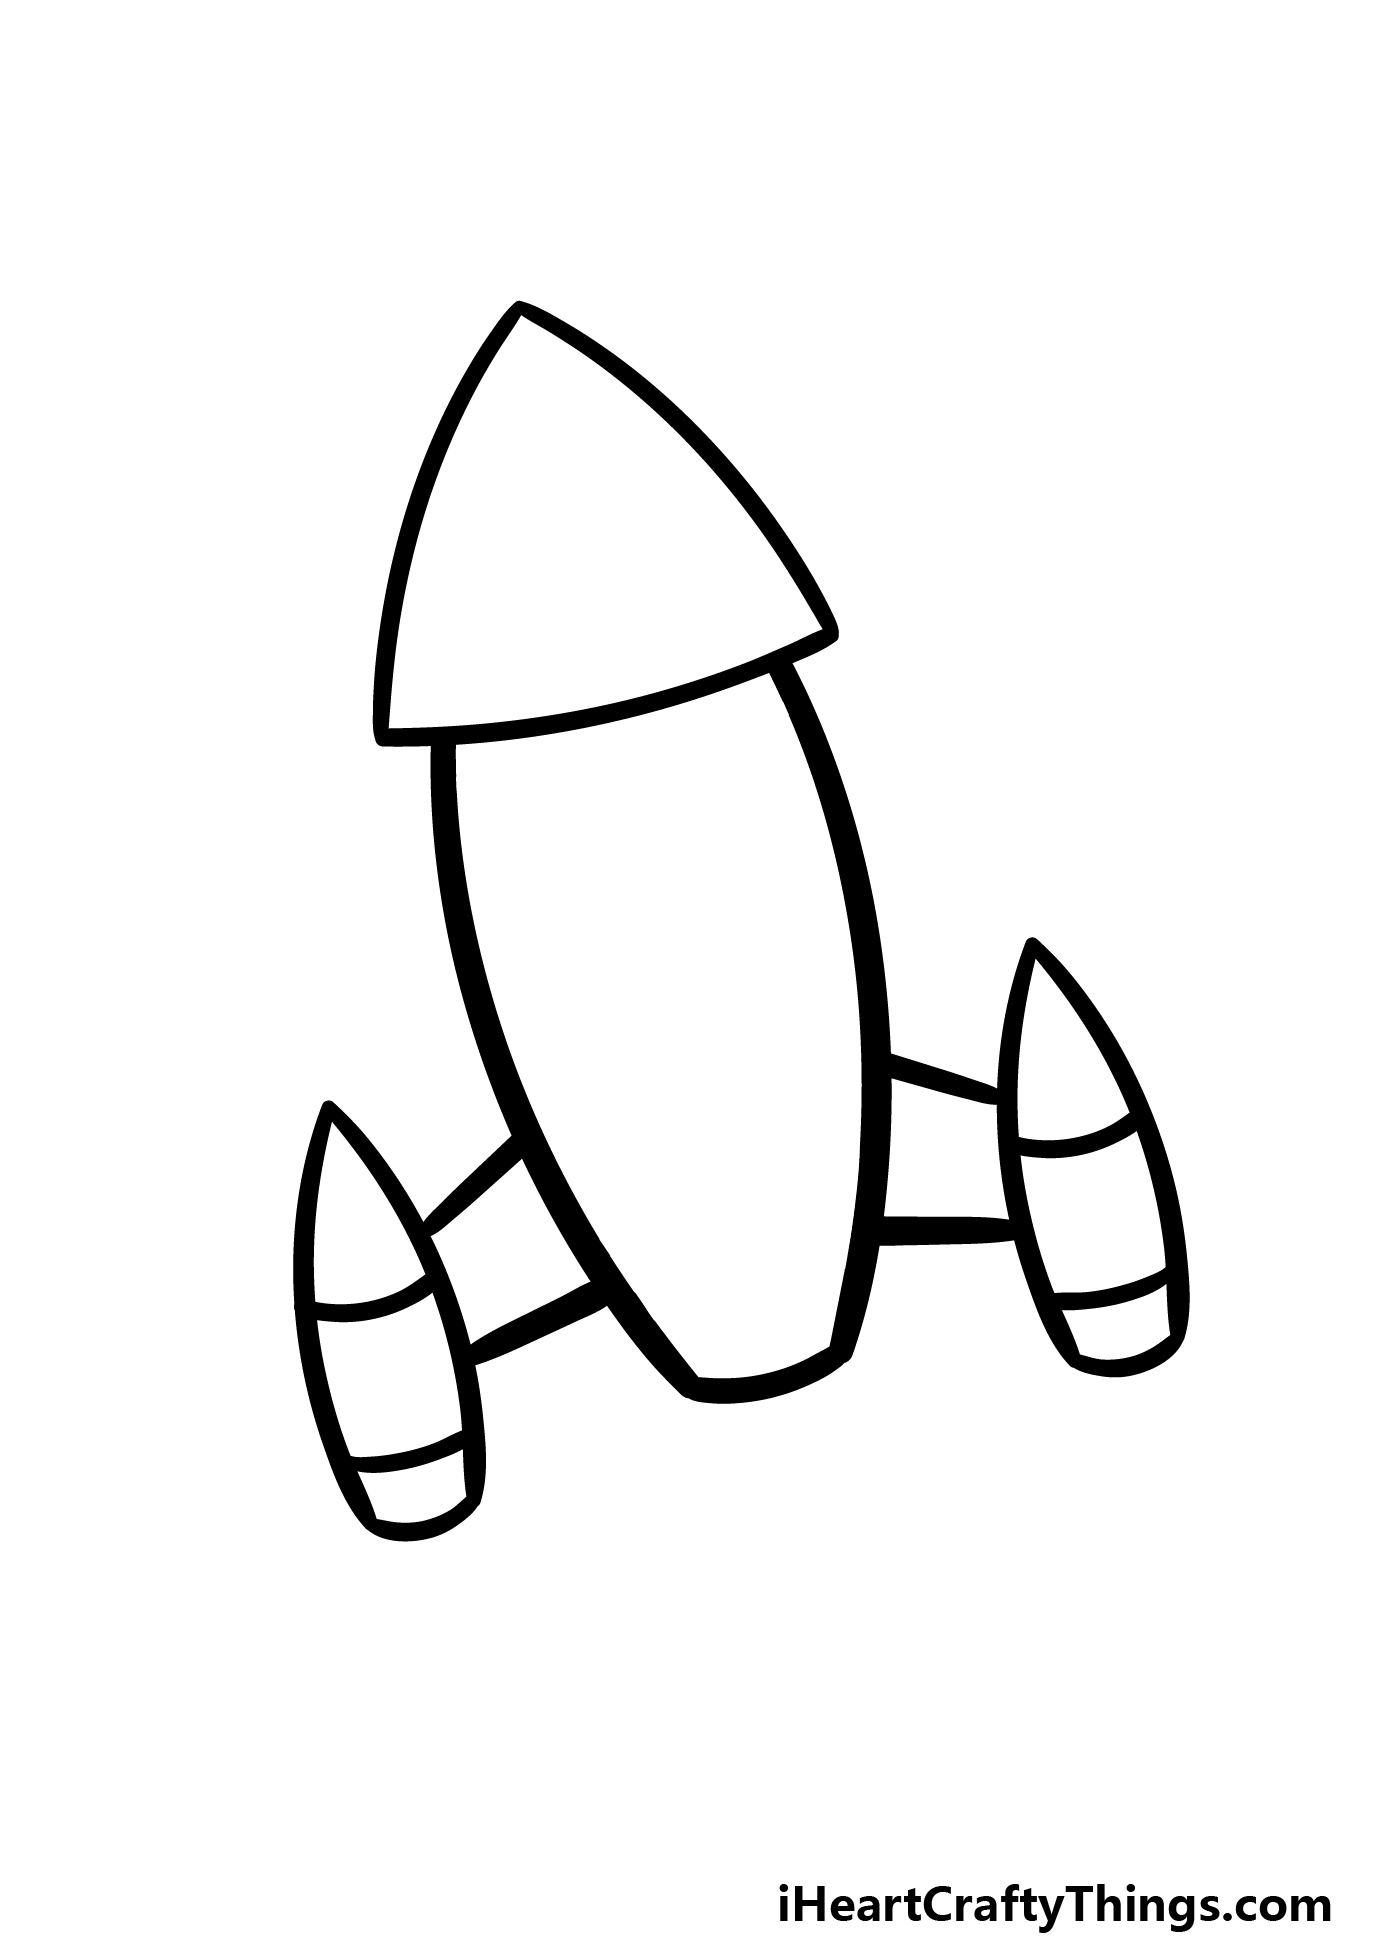 Cartoon Rocket Drawing - How To Draw A Cartoon Rocket Step By Step